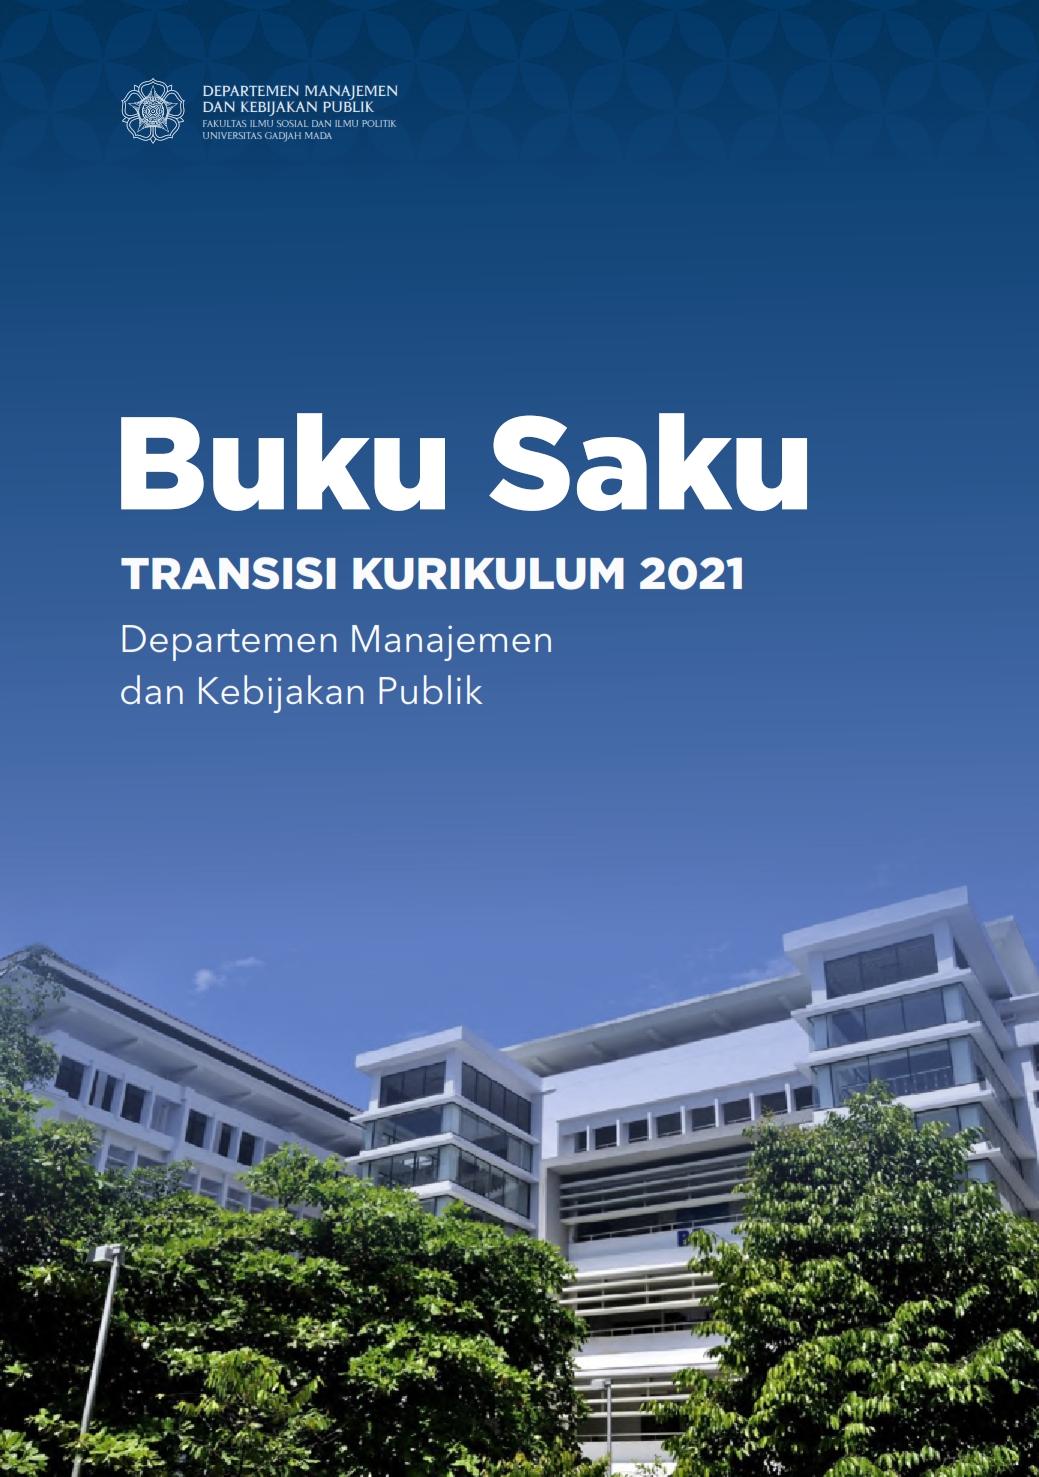 2021 Curriculum Transition Pocket Book